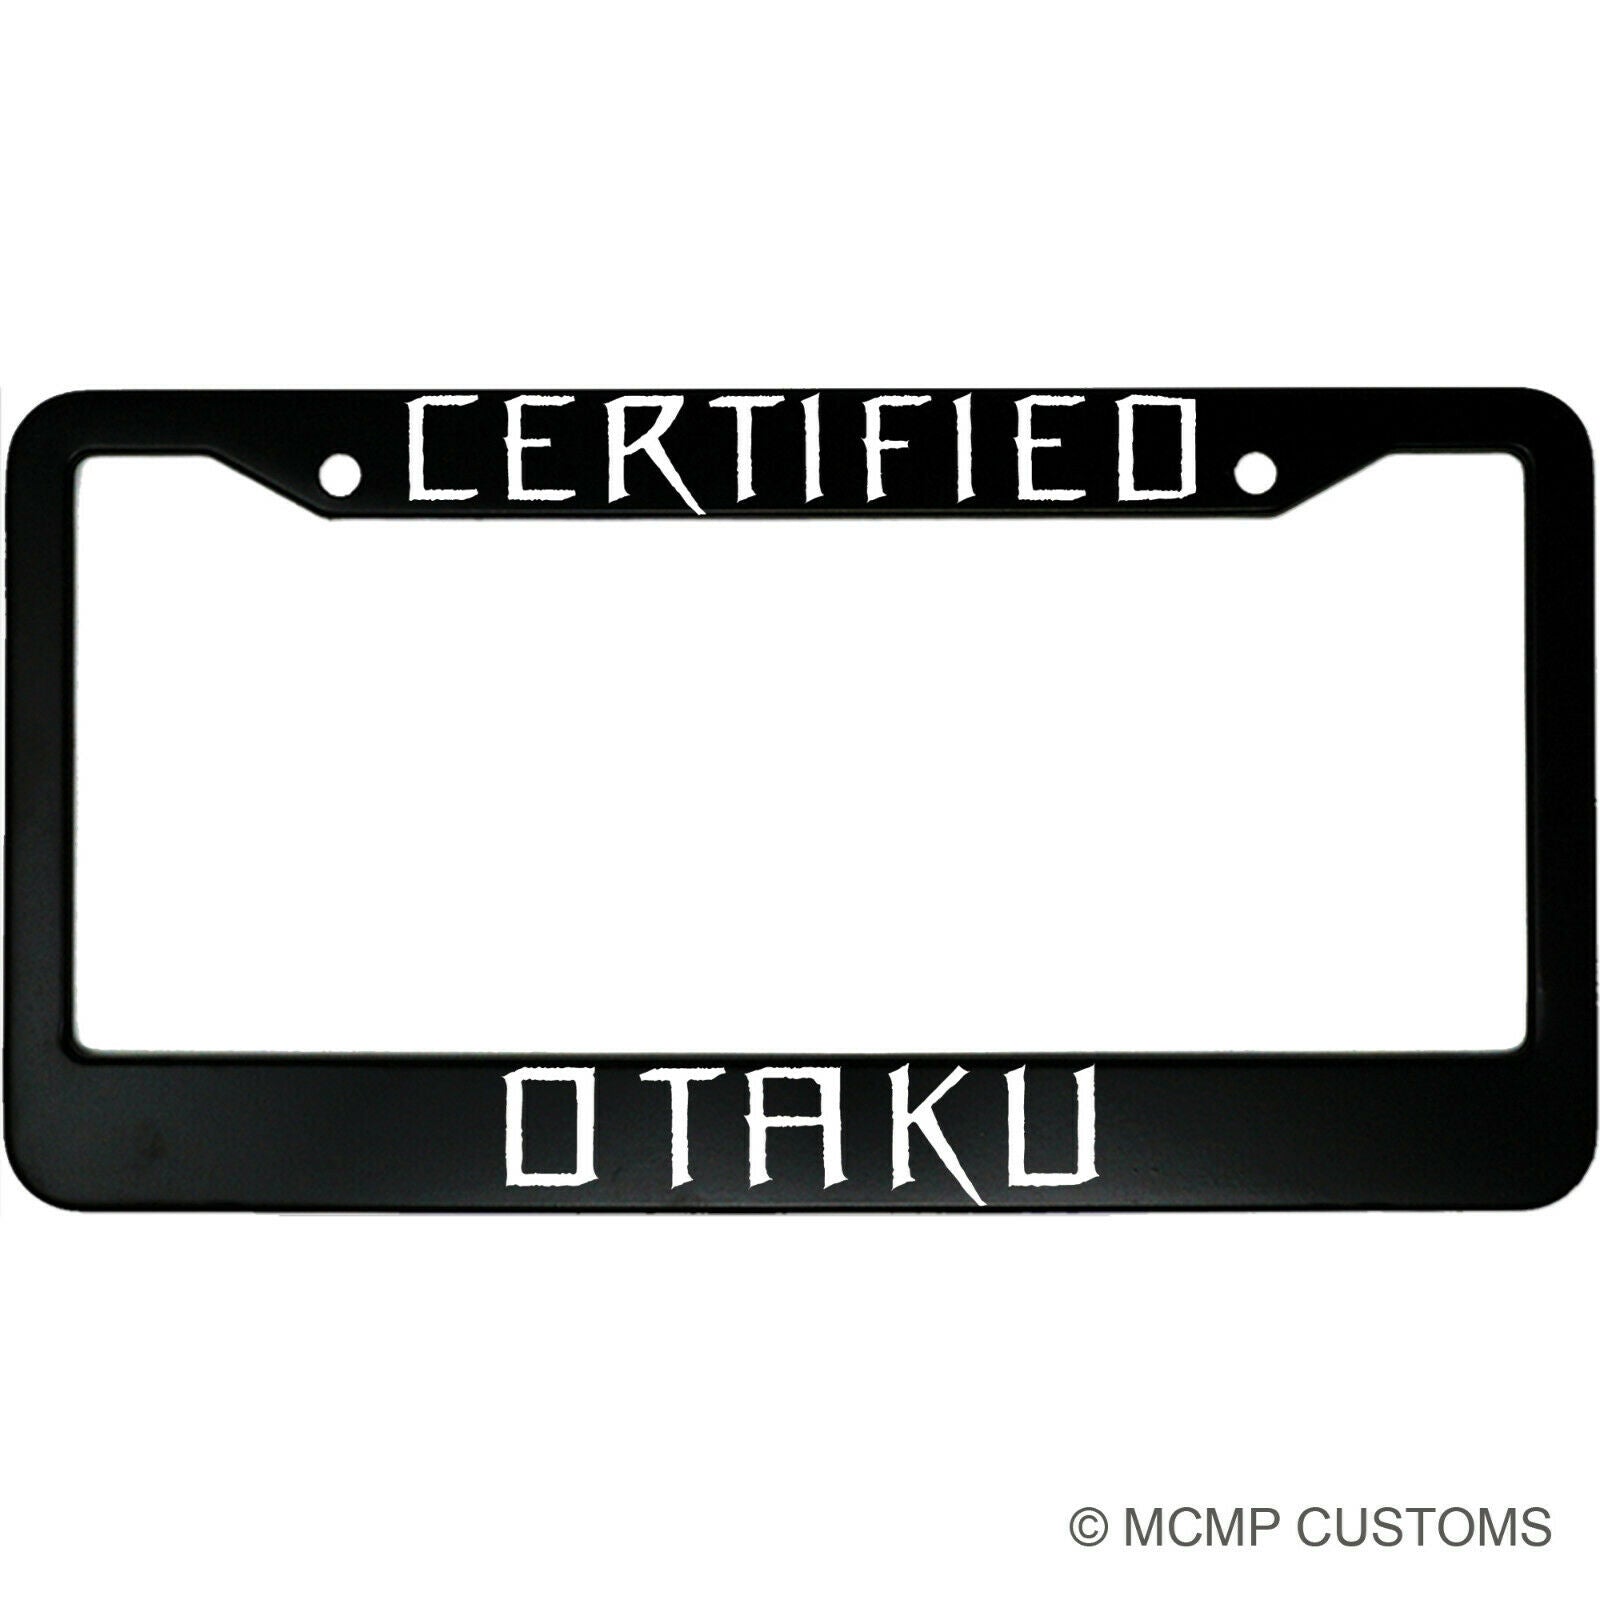 Certified Otaku